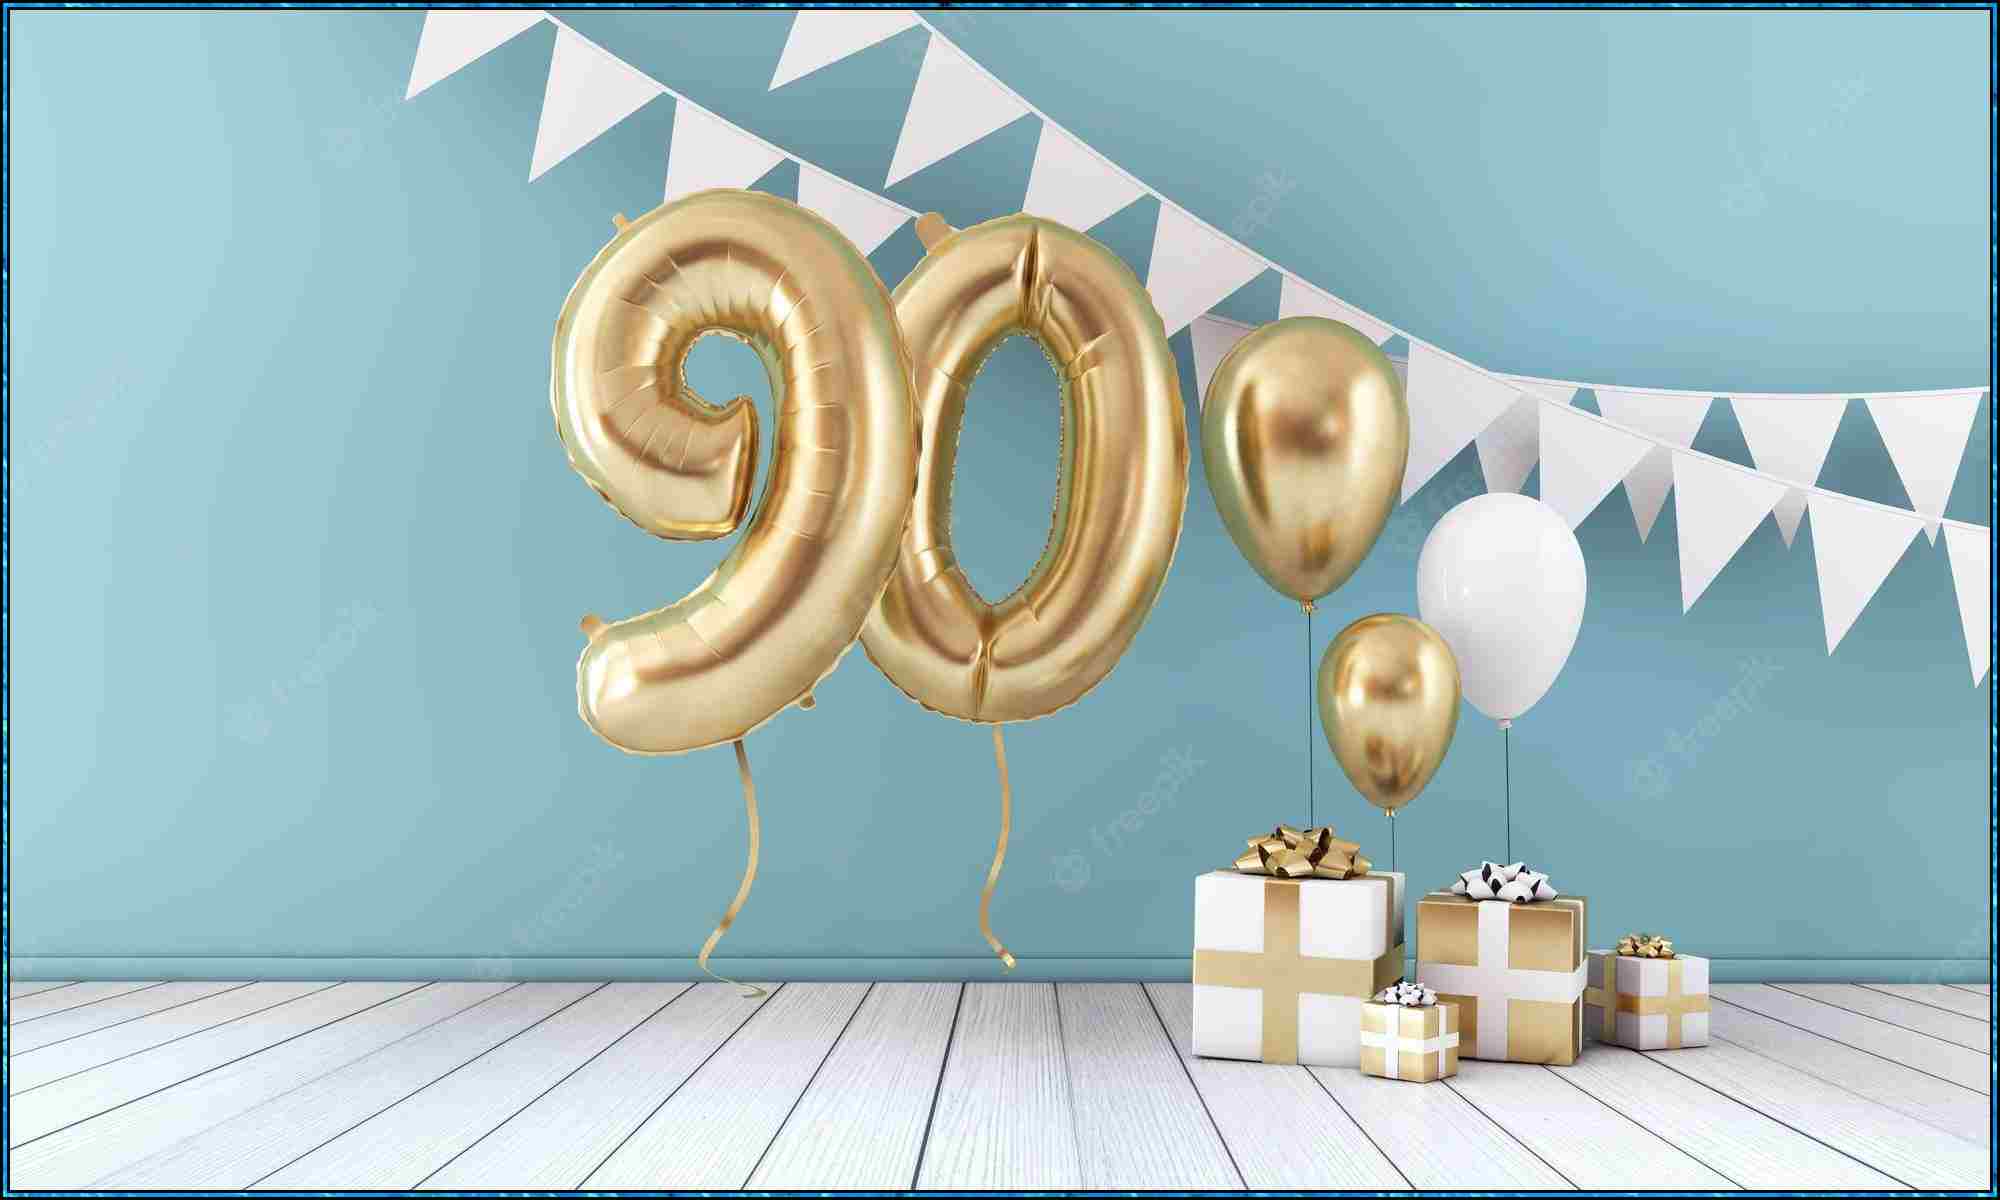 90th birthday balloons image
